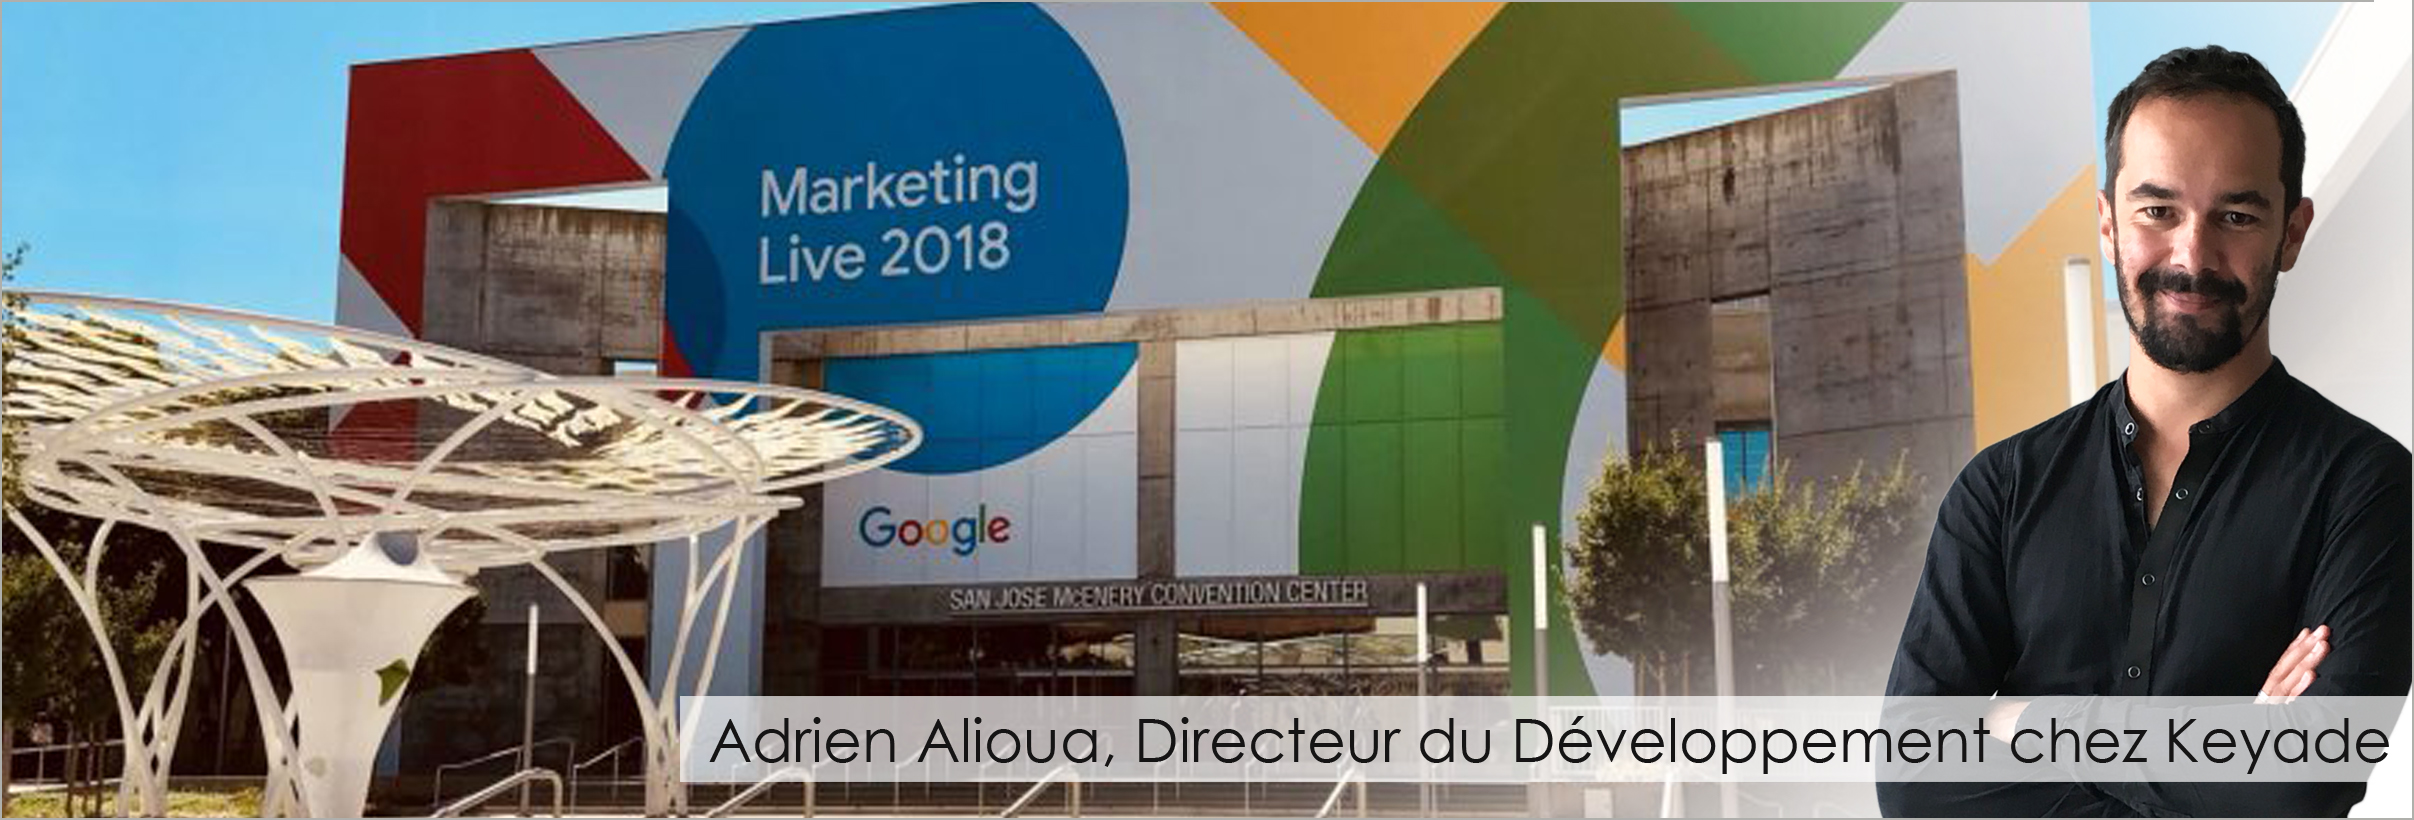 Adrien at Google Marketing Live 3